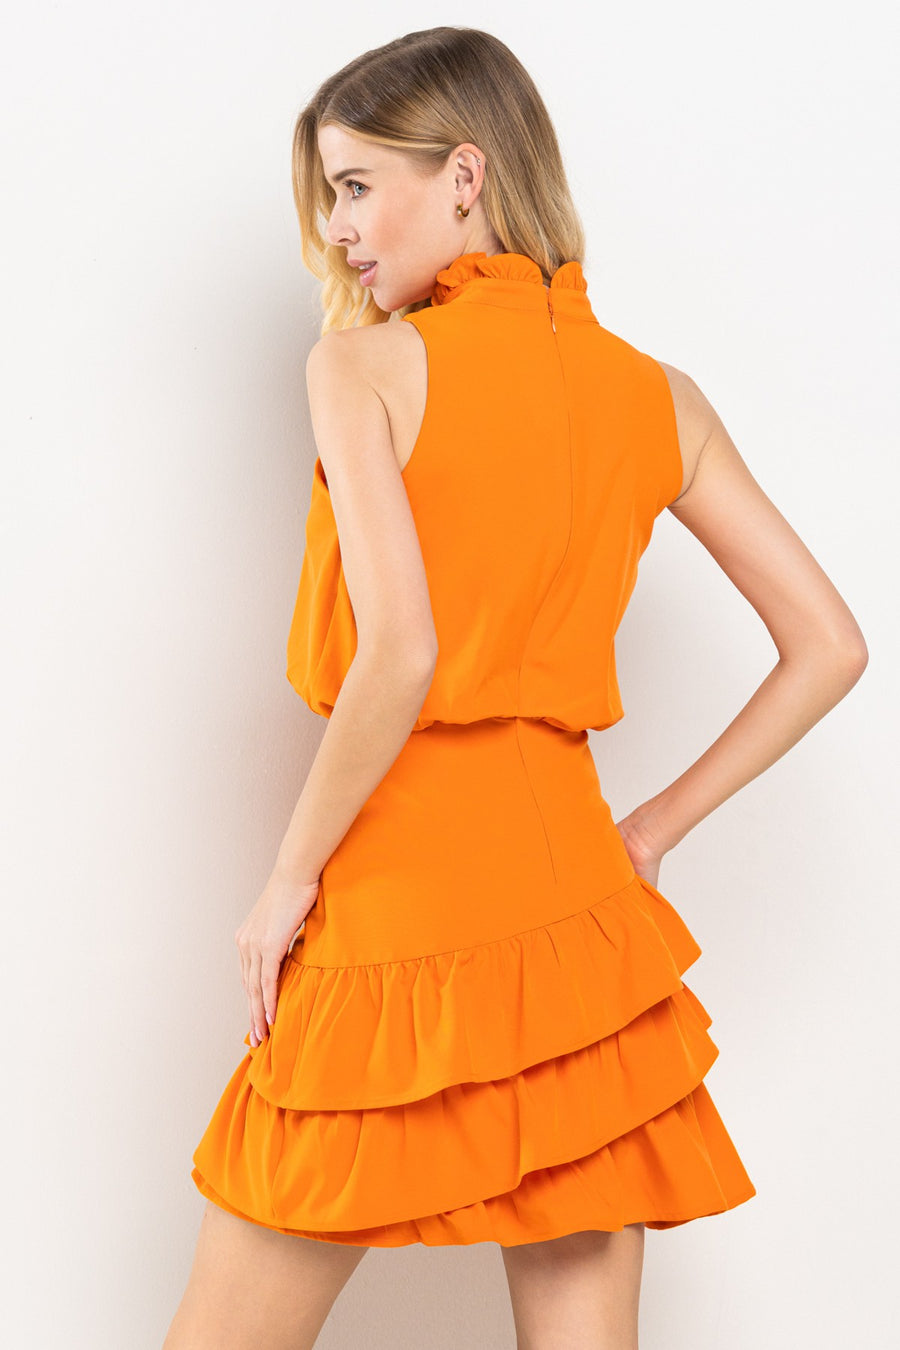 Sweetest Thing Dress - Orange